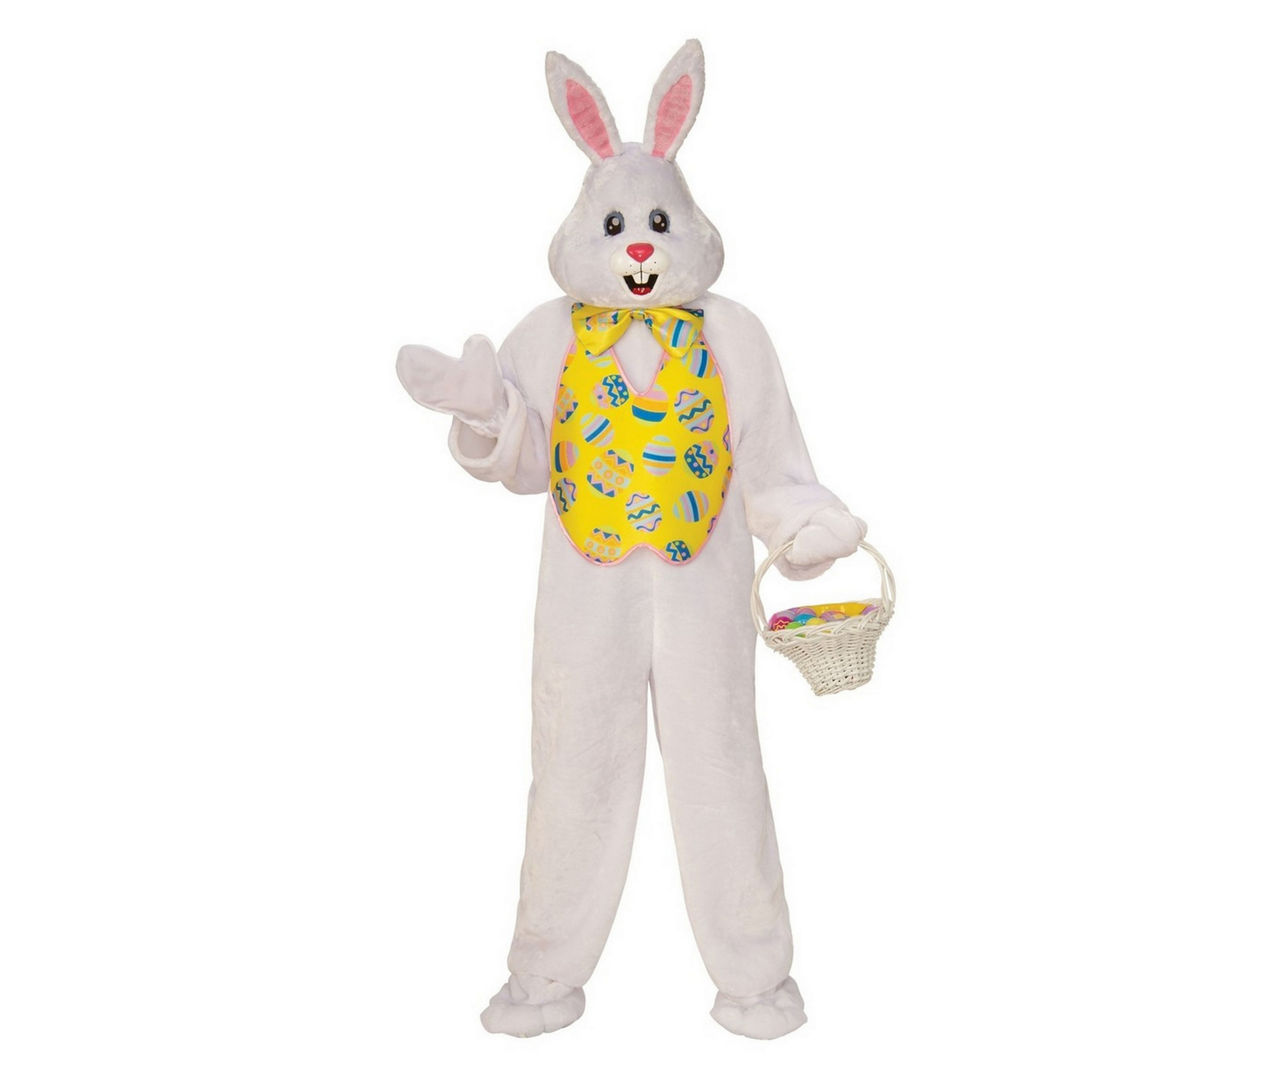 Adult Size X-Large Egg Vest Bunny Mascot Costume